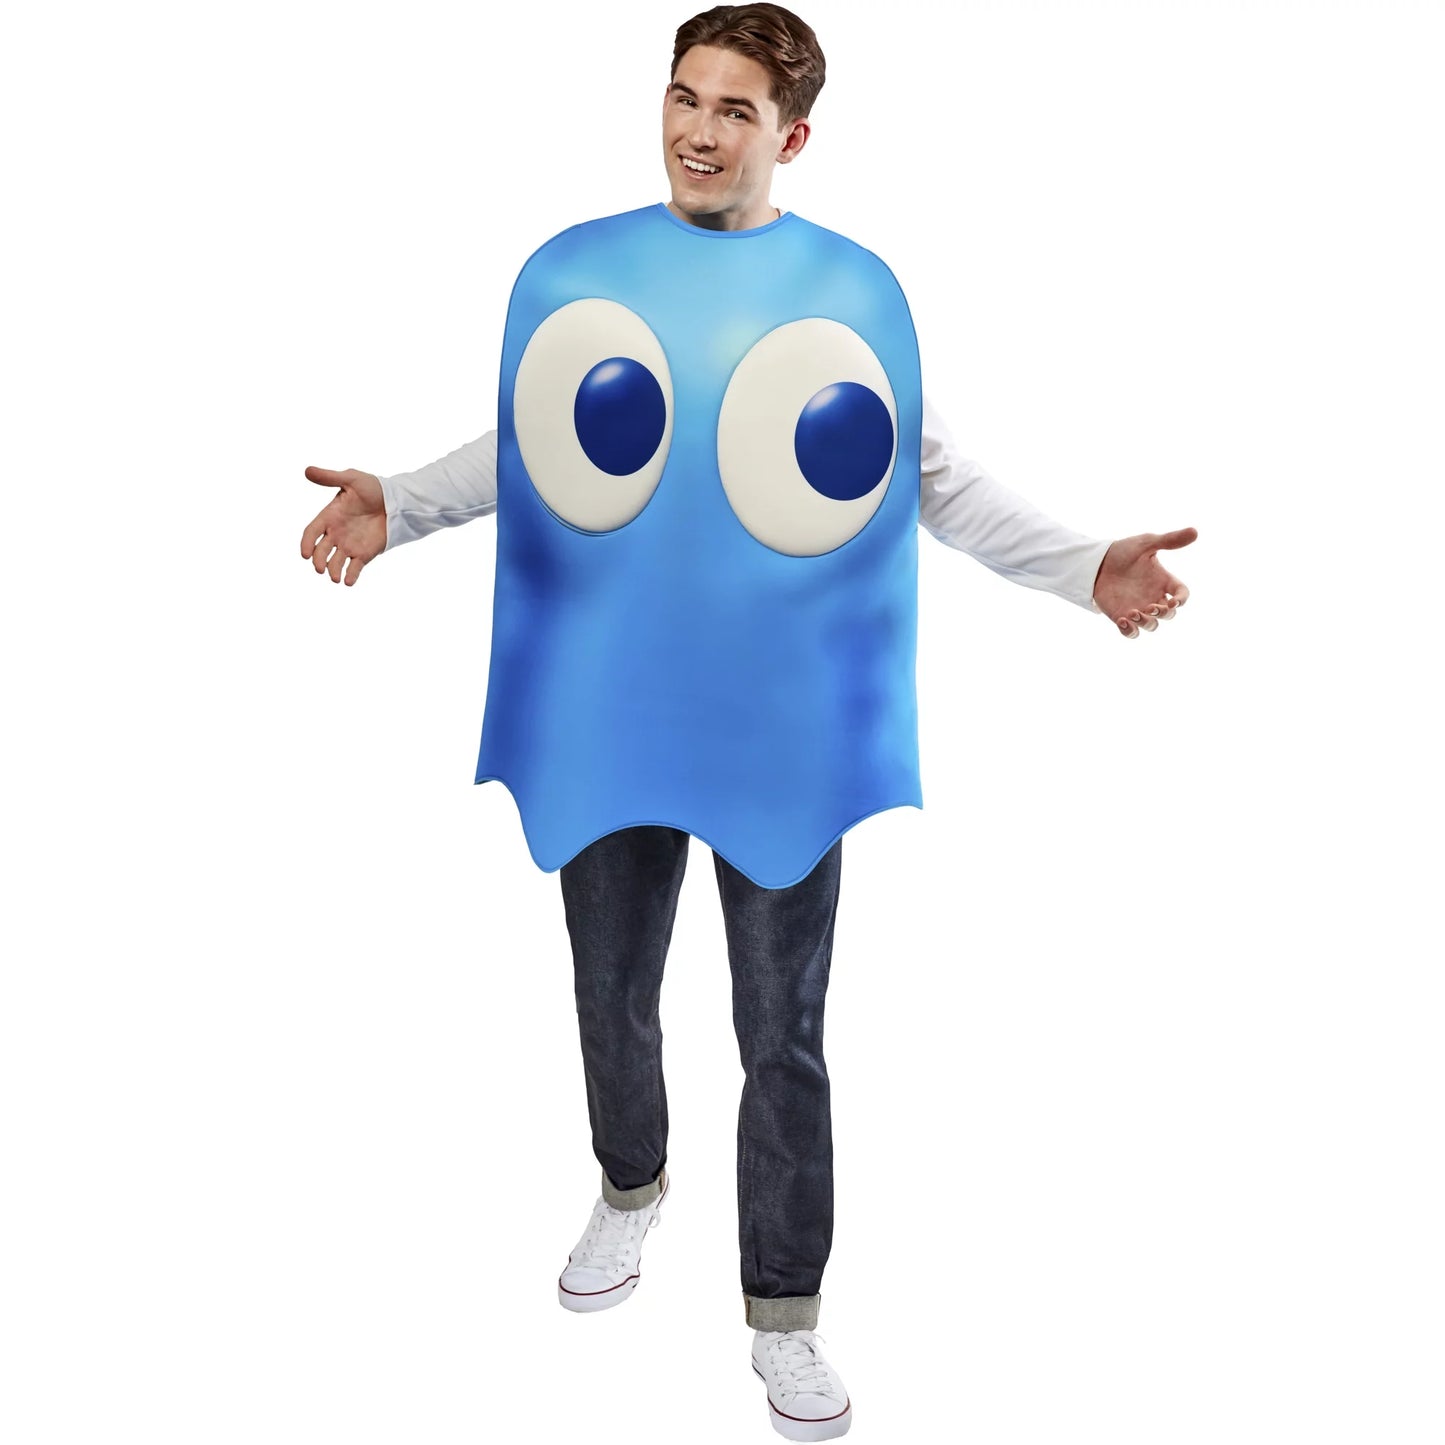 Pac-Man Inky Men's Costume